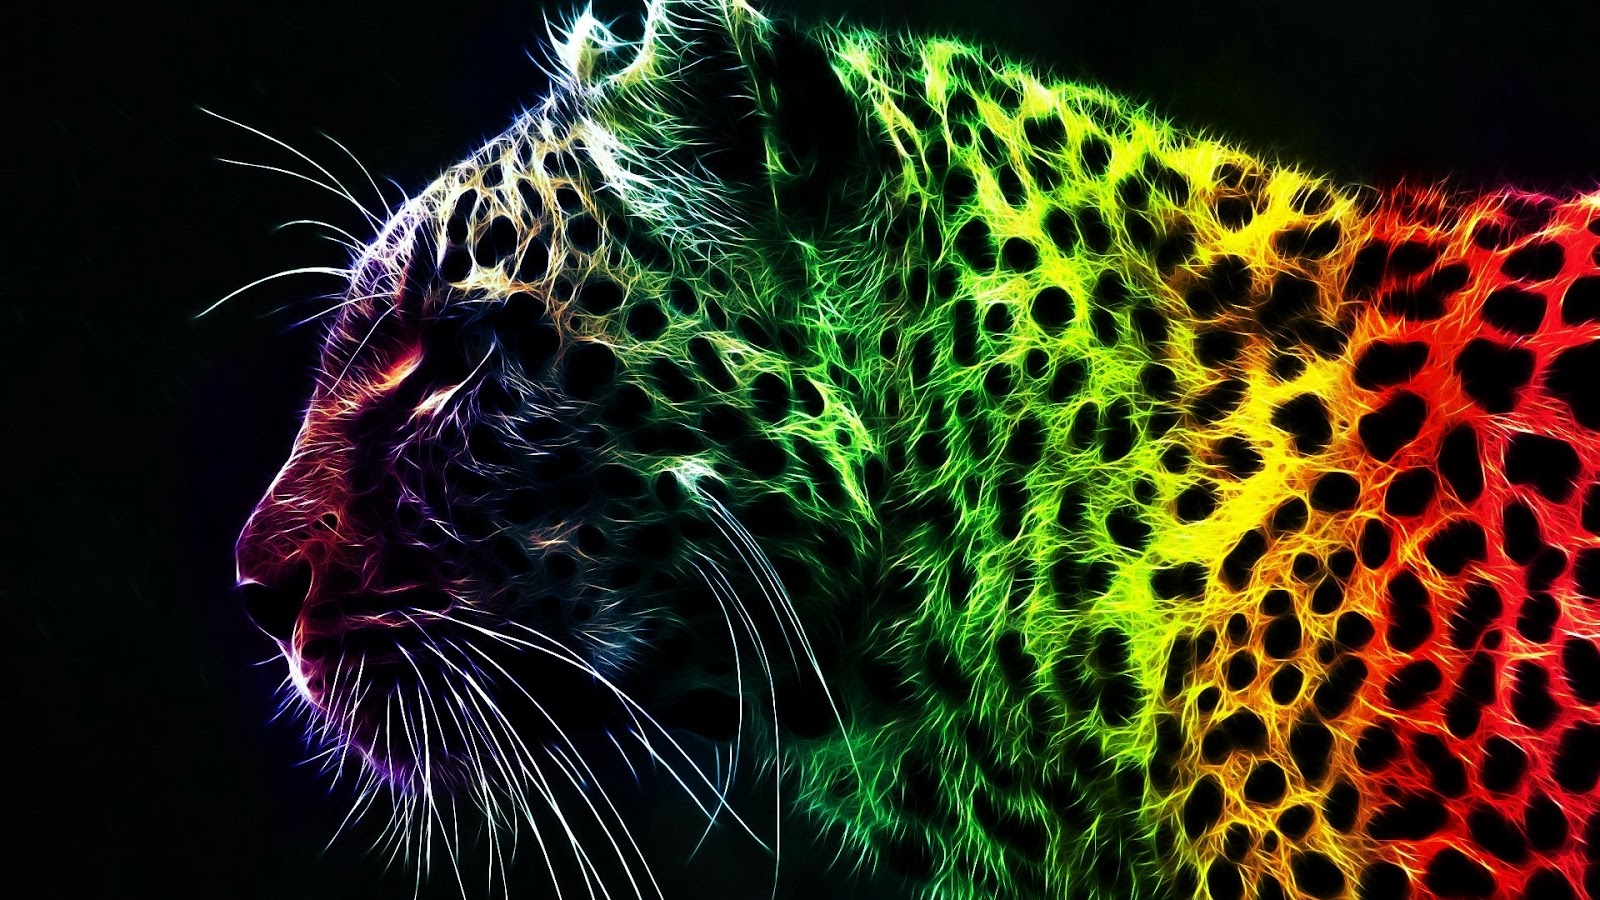 abstract cheetah animal picture hd wallpaperjpg 1600x900